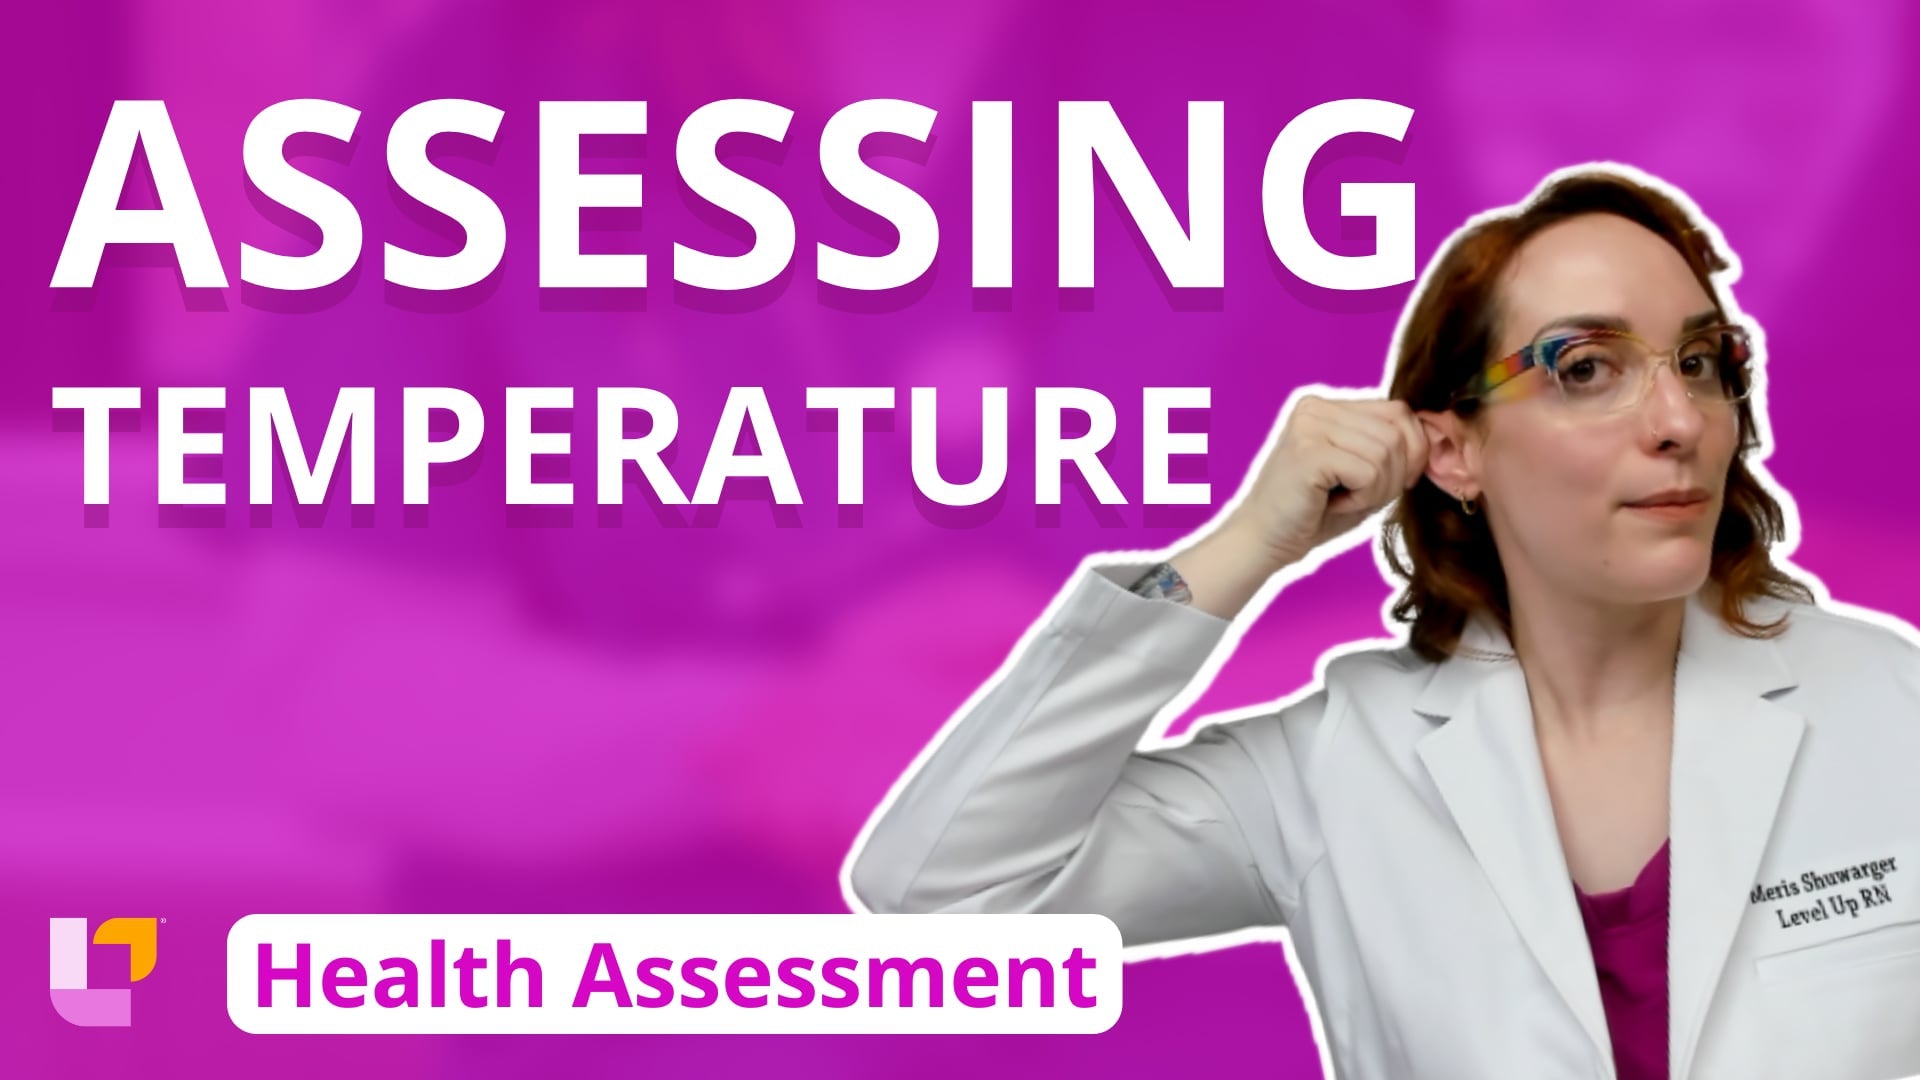 Health Assessment, part 4: Assessing Temperature - LevelUpRN